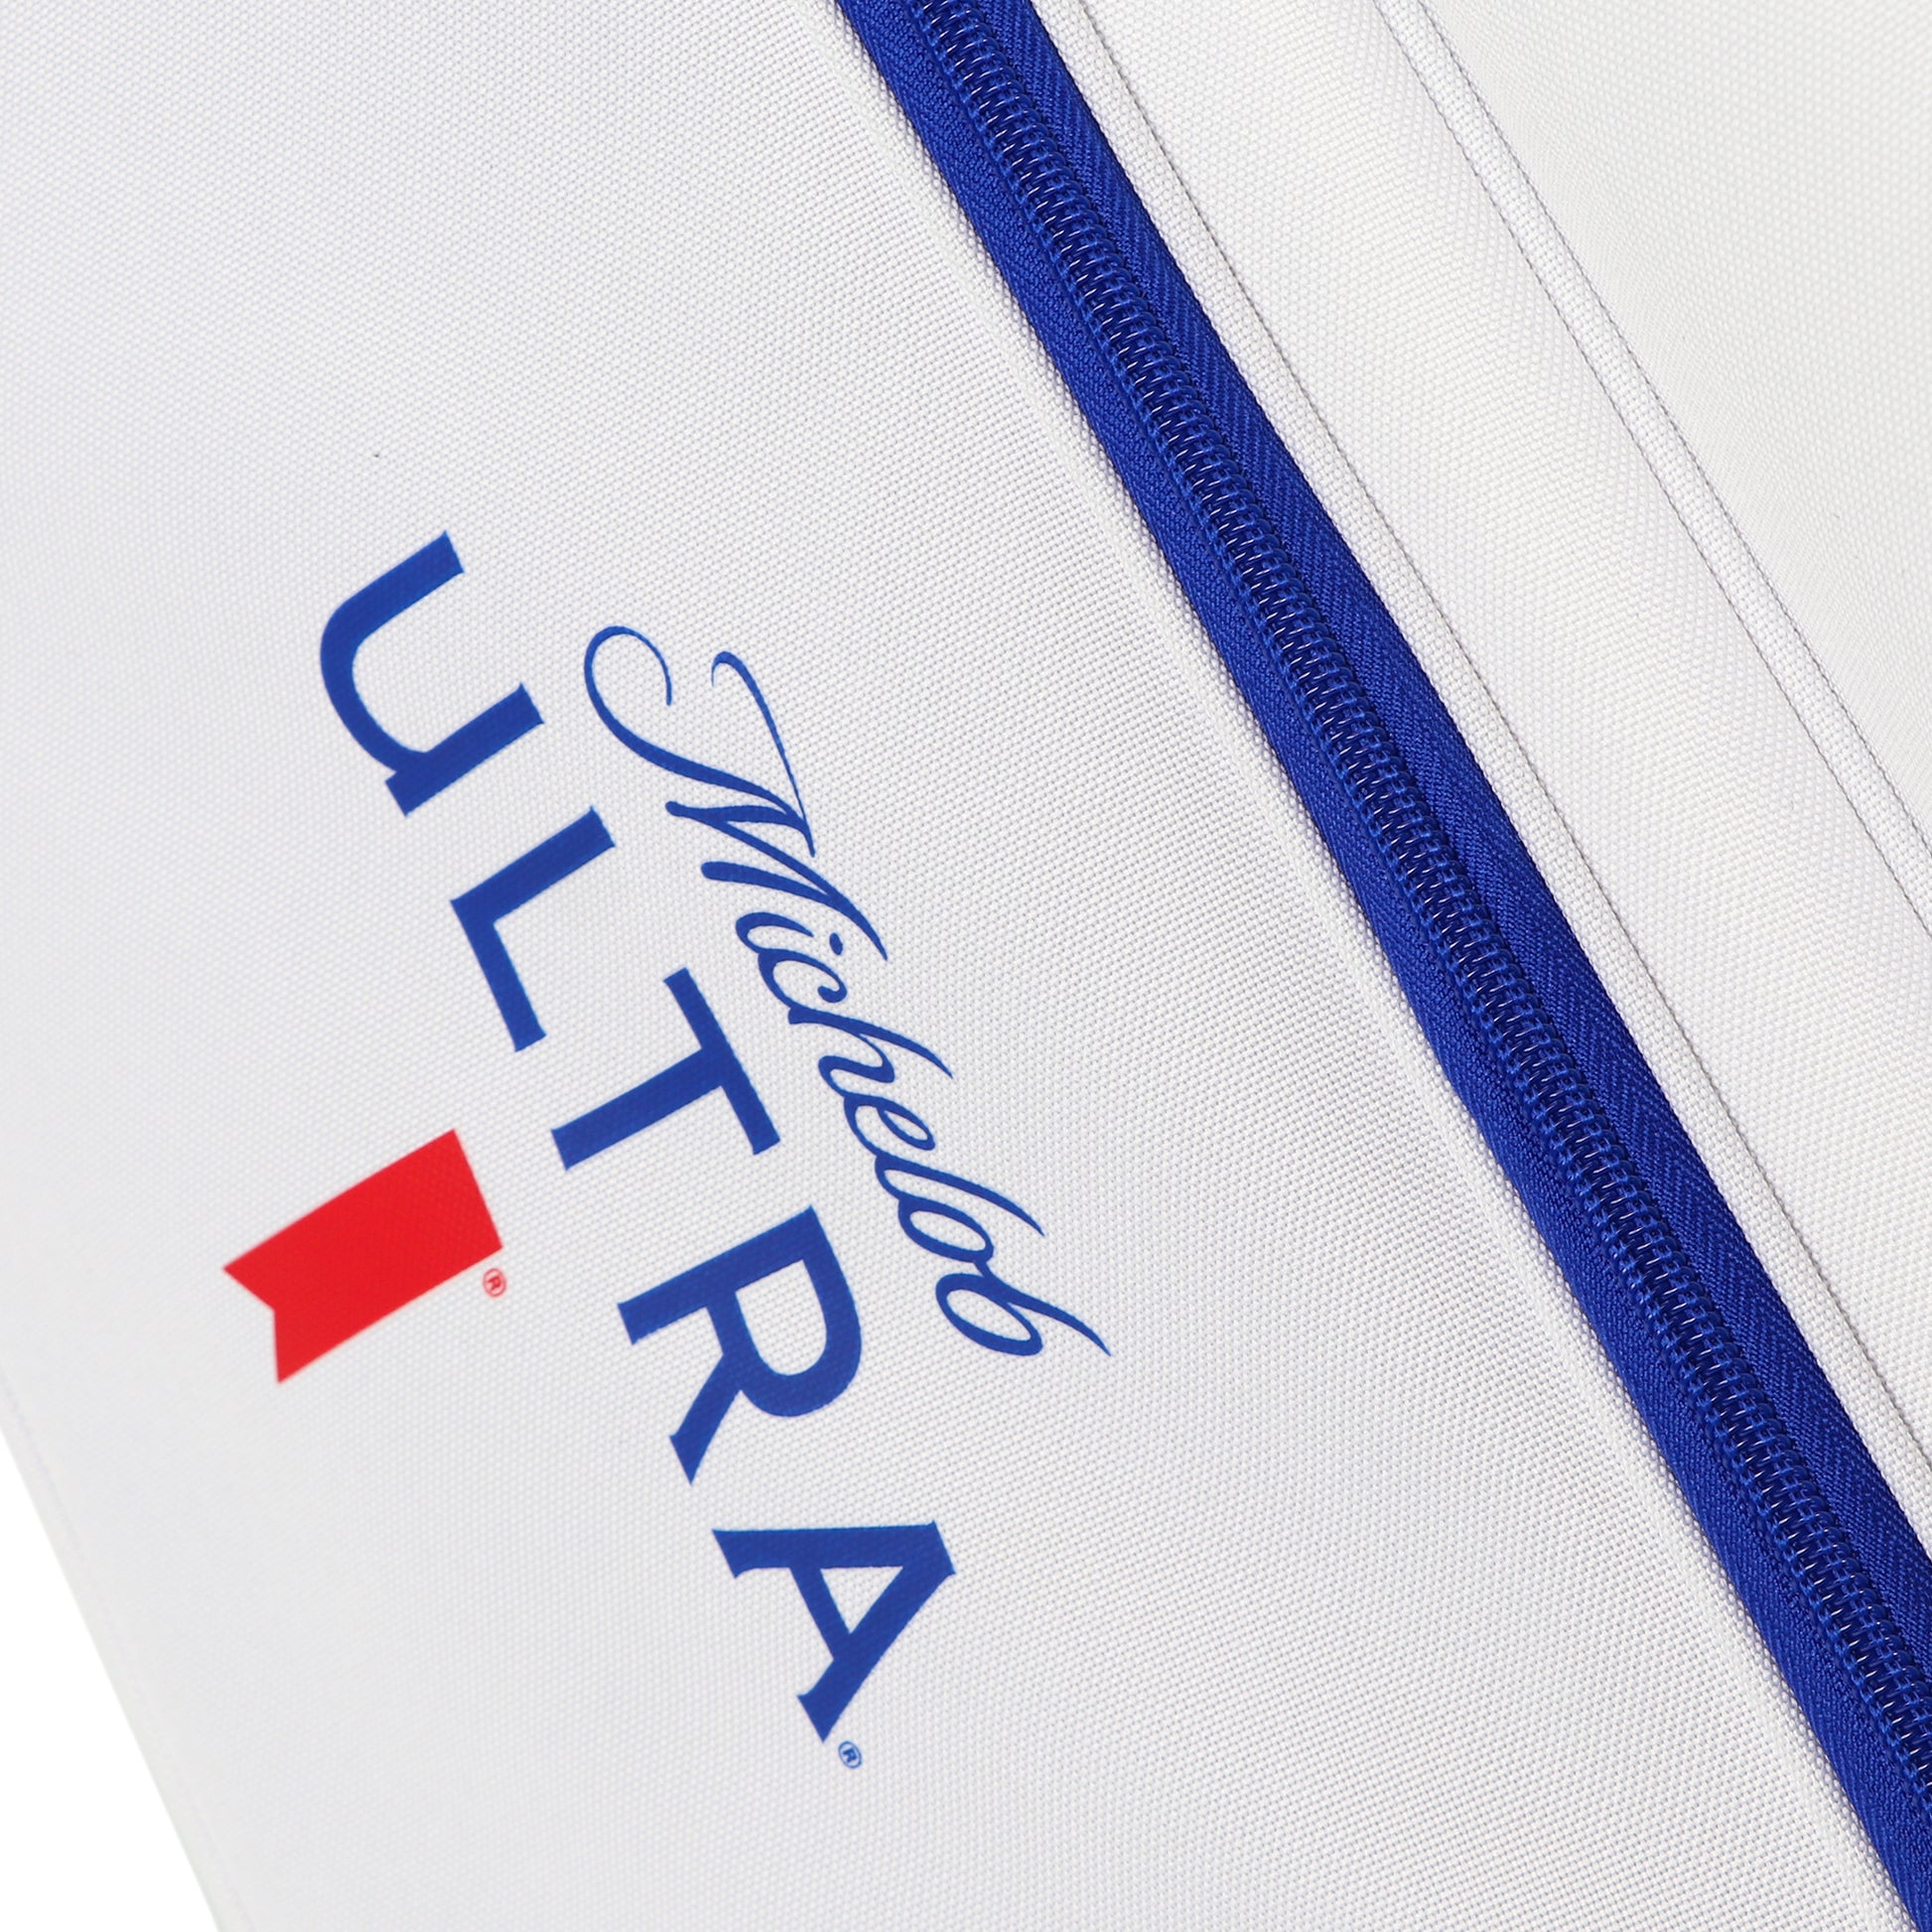 Michelob ULTRA golf bag detail